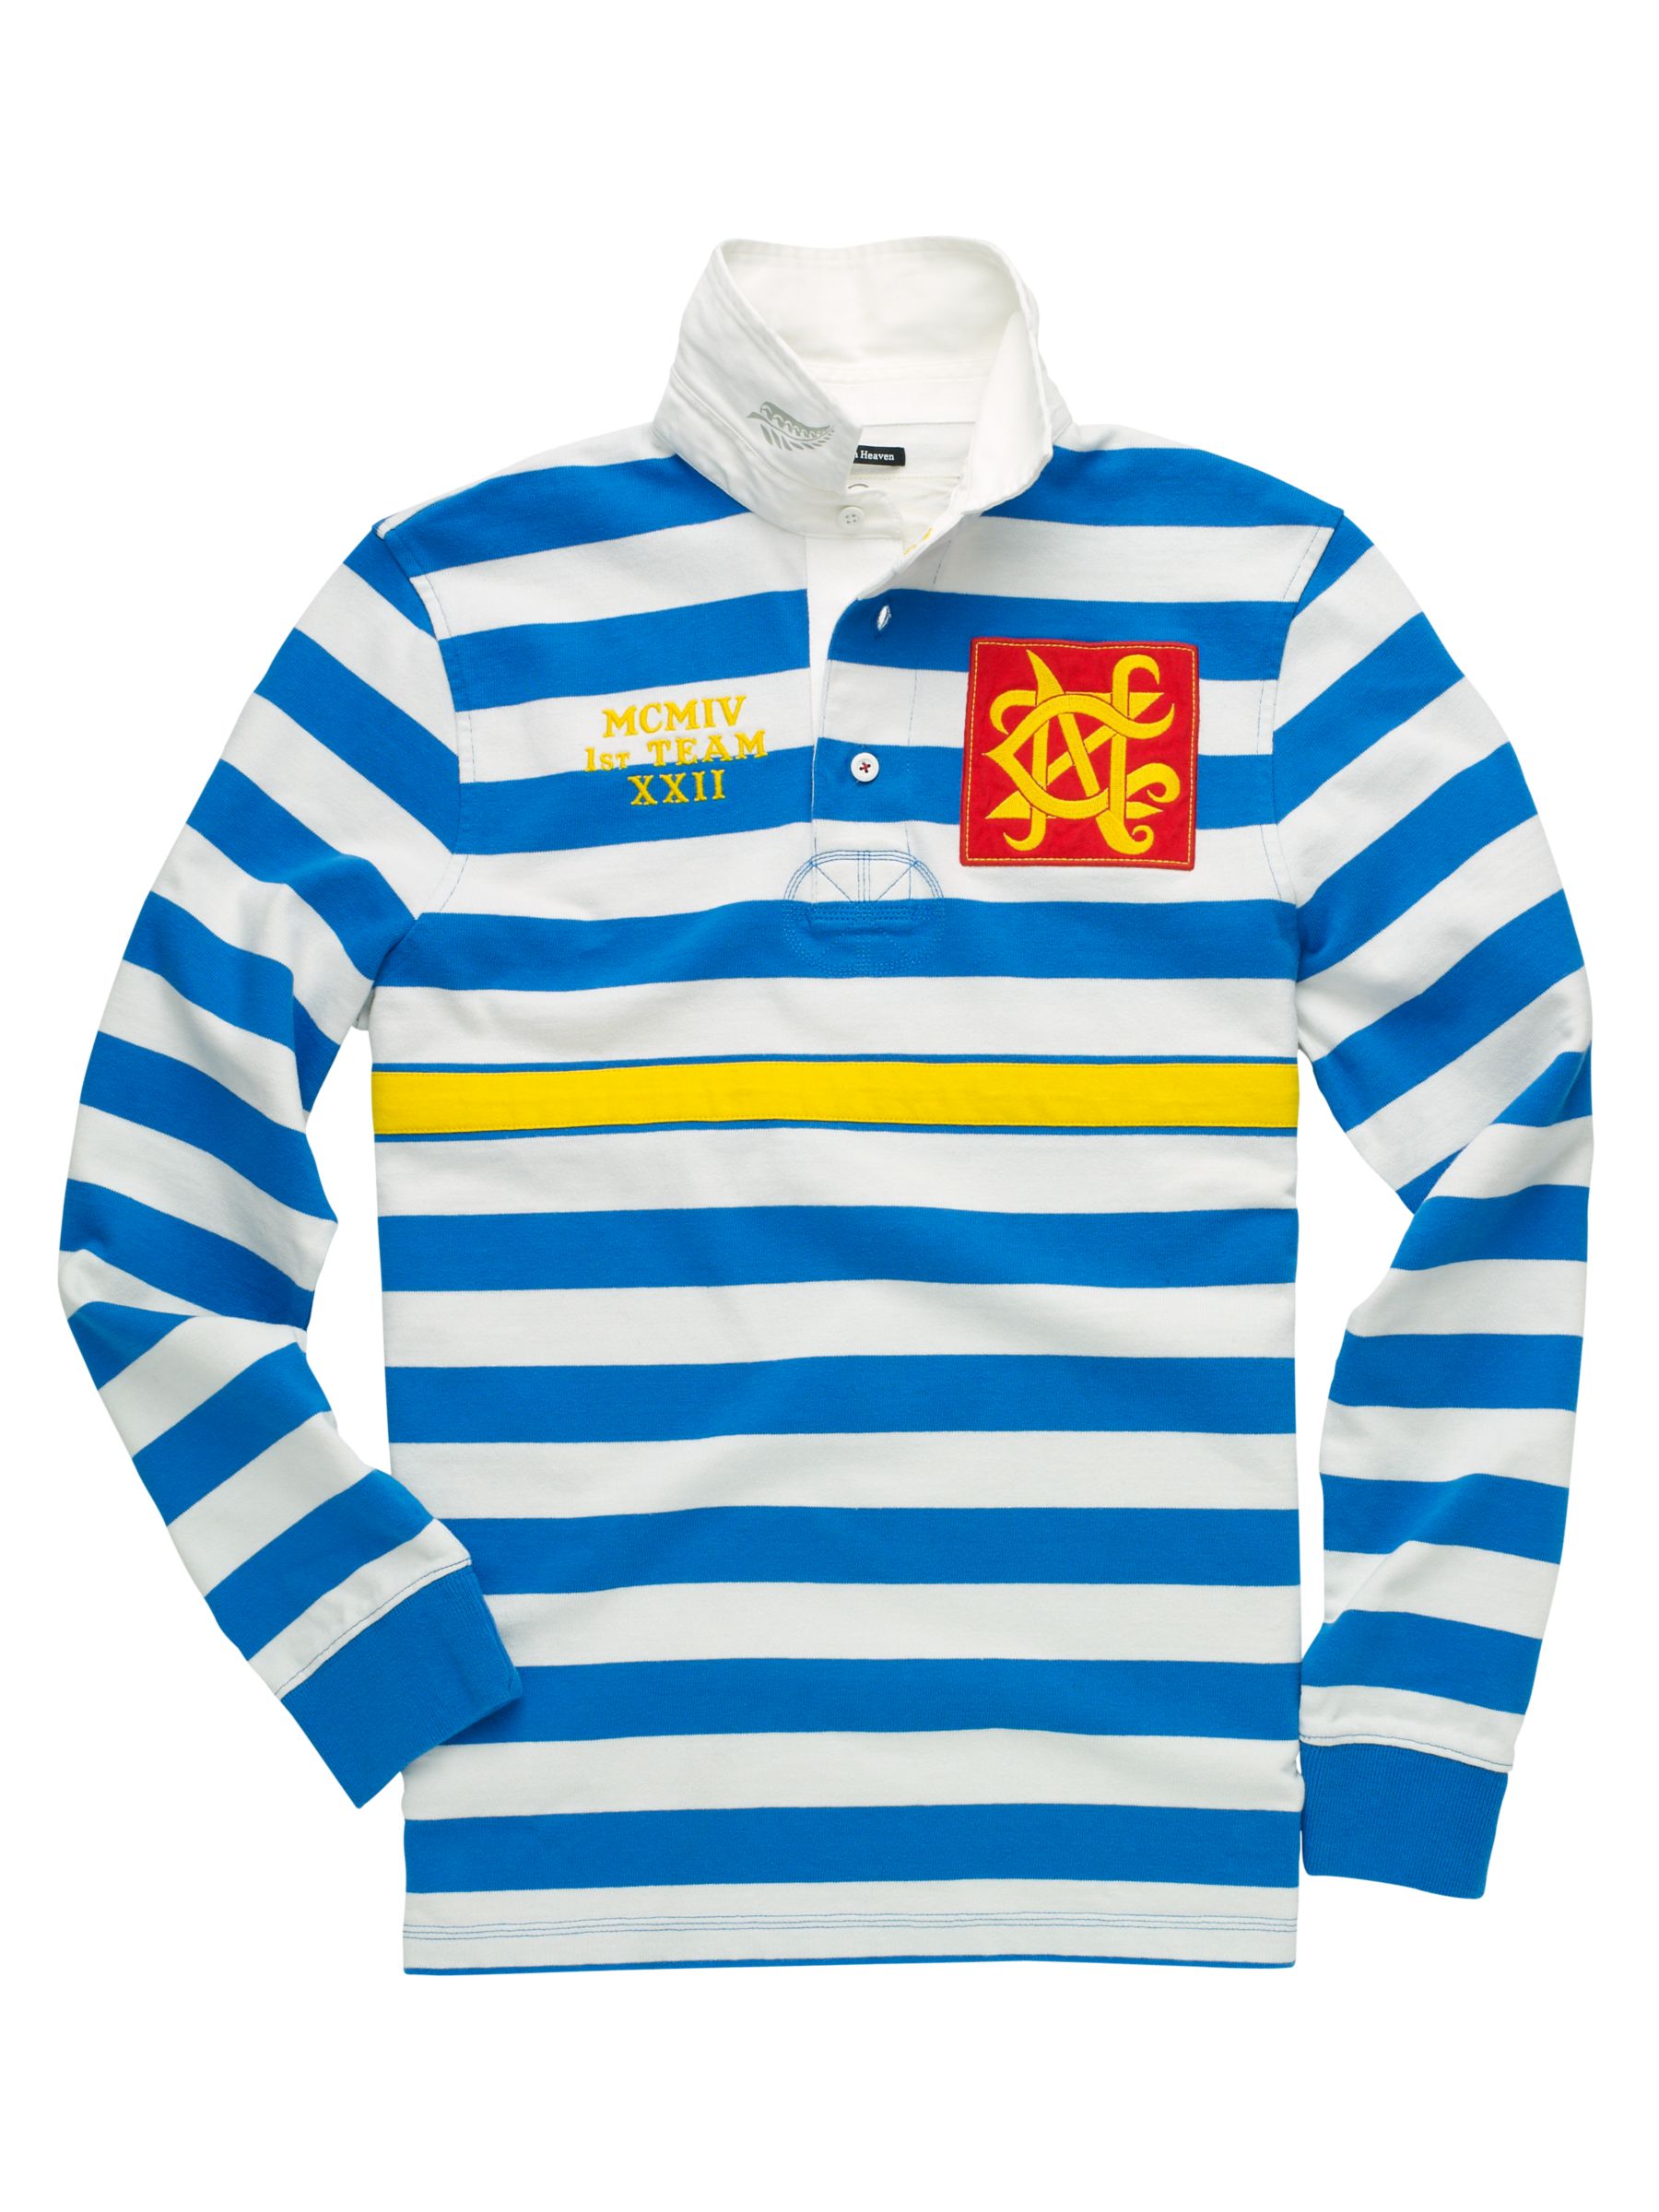 Blenheim Multi Stripe Rugby Shirt, Blue